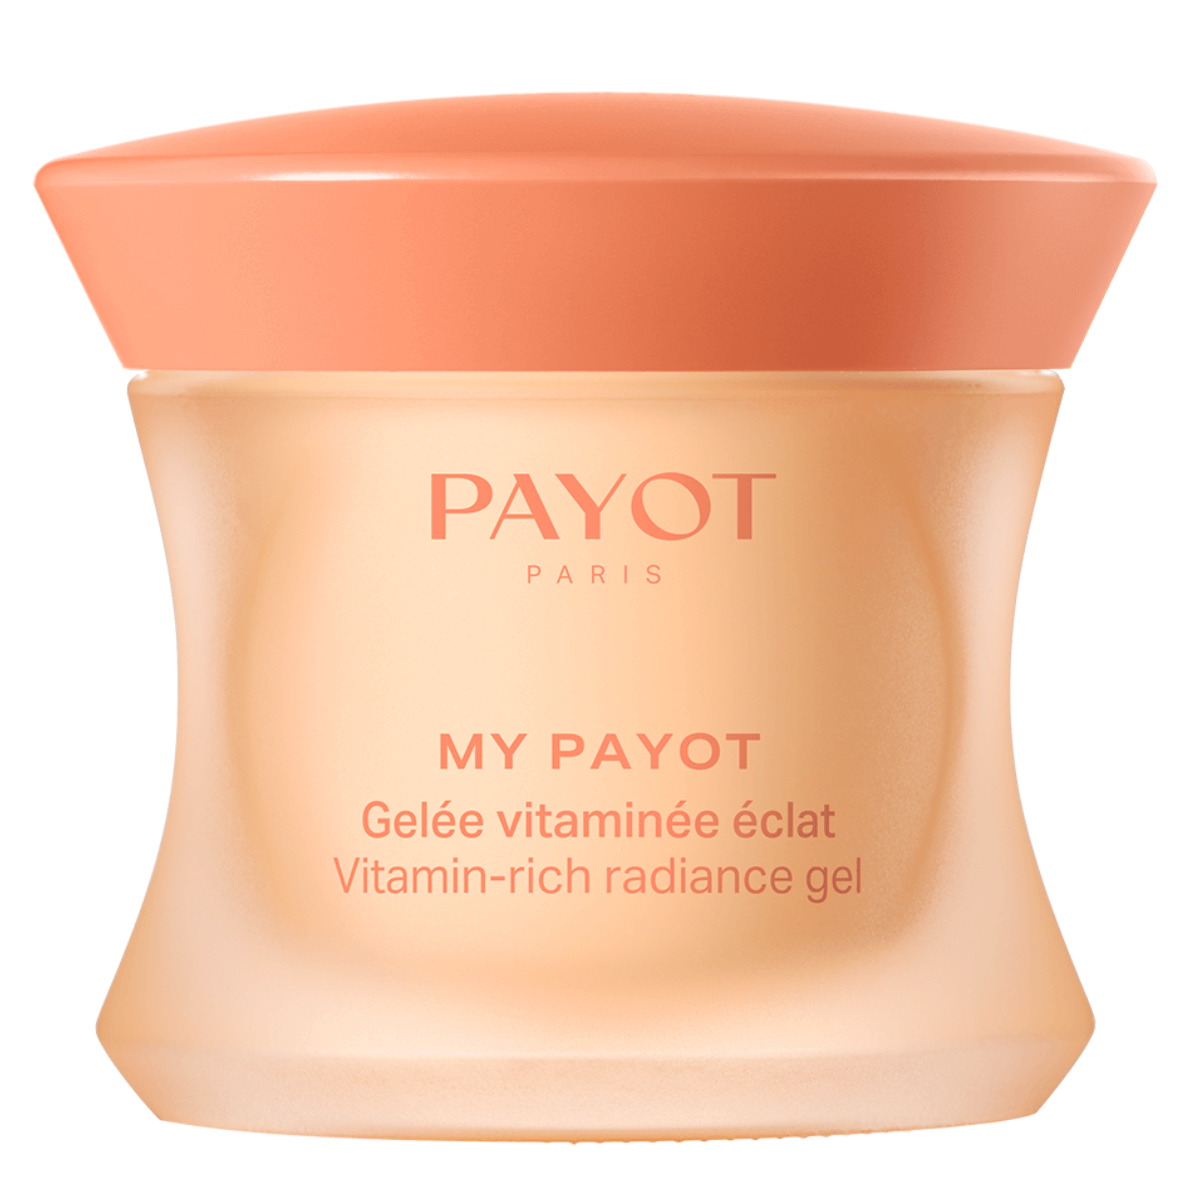 Billede af Payot My Payot Vitamin-Rich Radiance Gel, 50 ml.